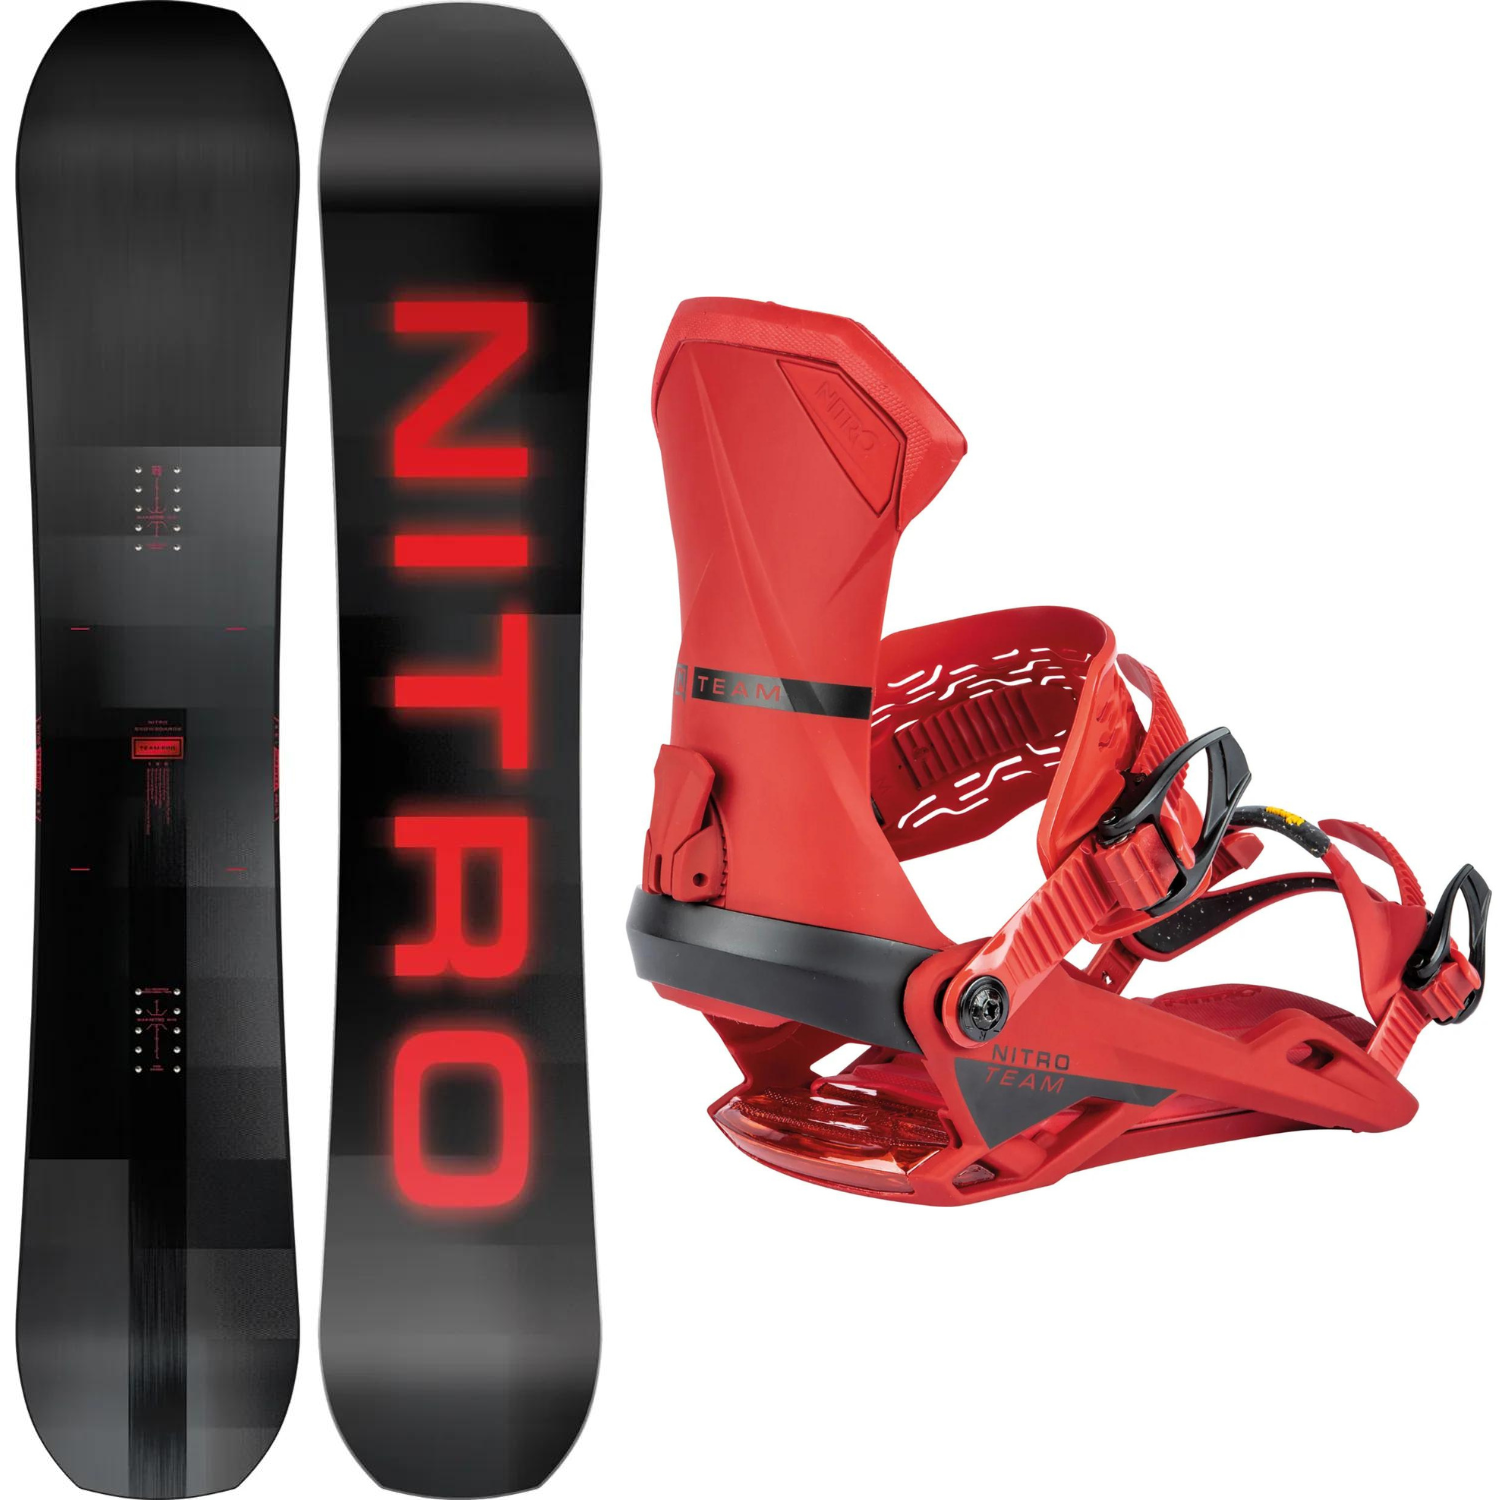 NITRO スノーボード pro series 155cm 品スノーボード - www.ietp.com